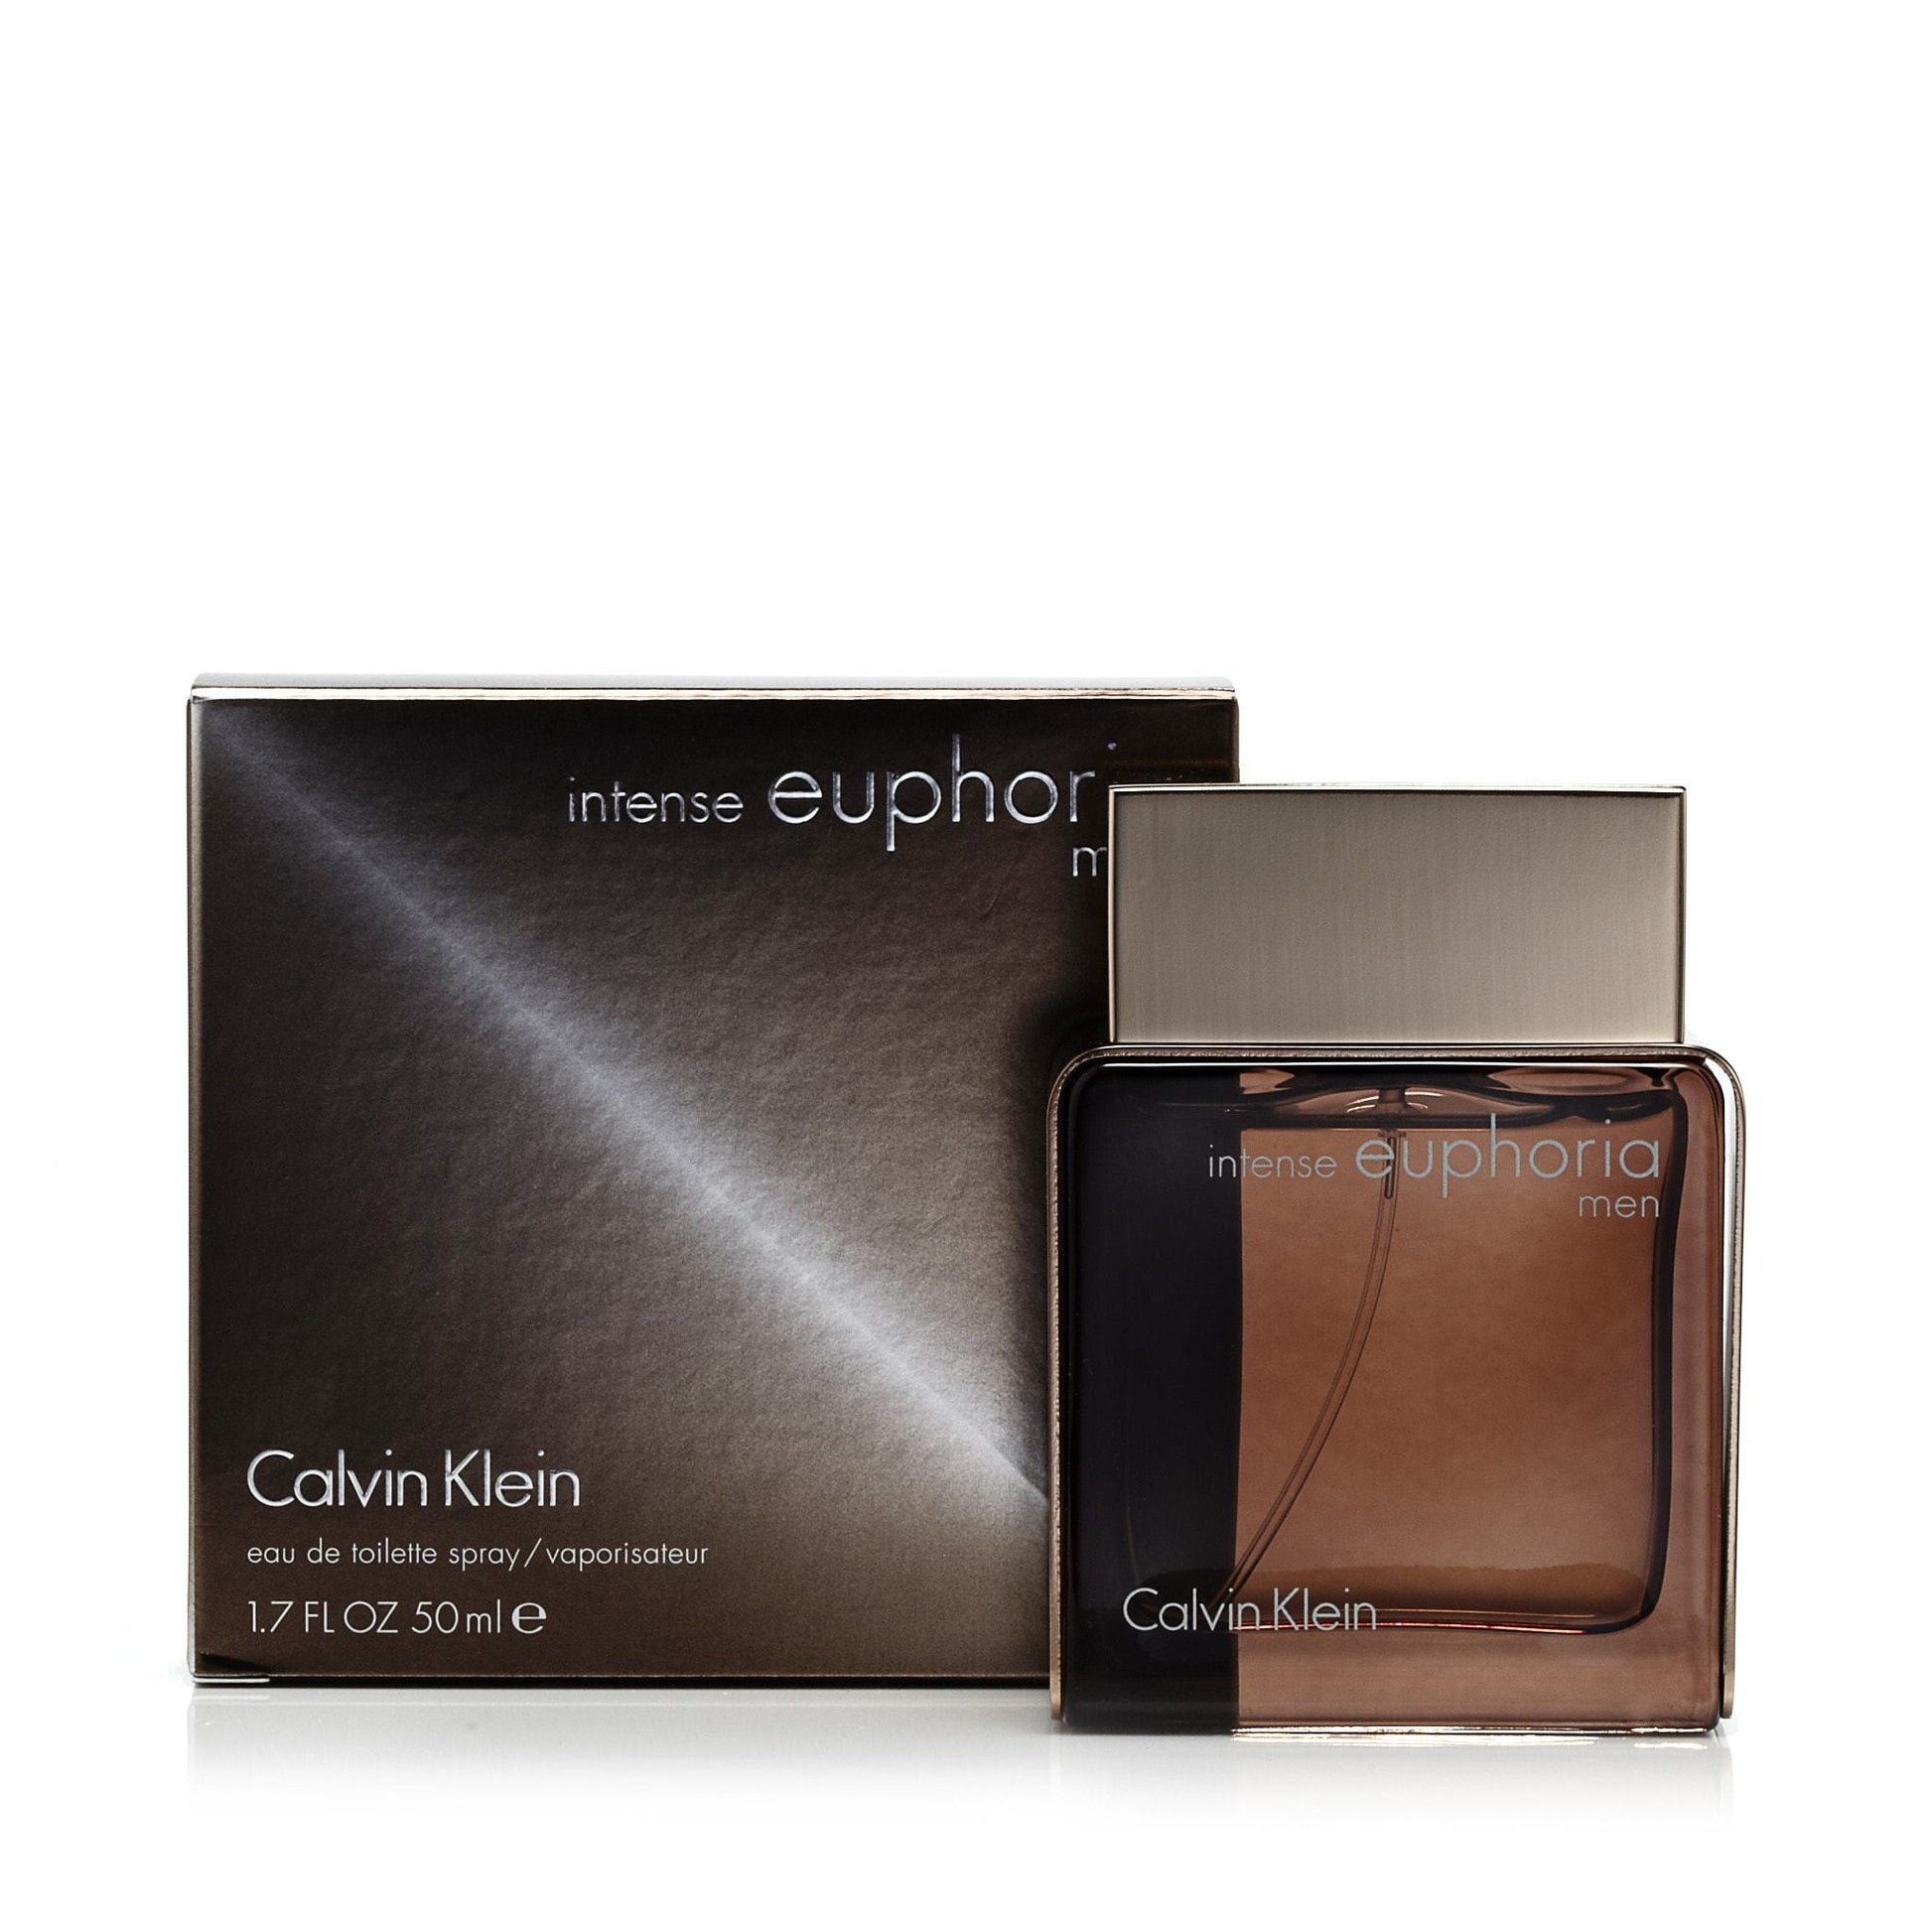 Euphoria Intense Eau de Toilette Spray for Men by Calvin Klein, Product image 3